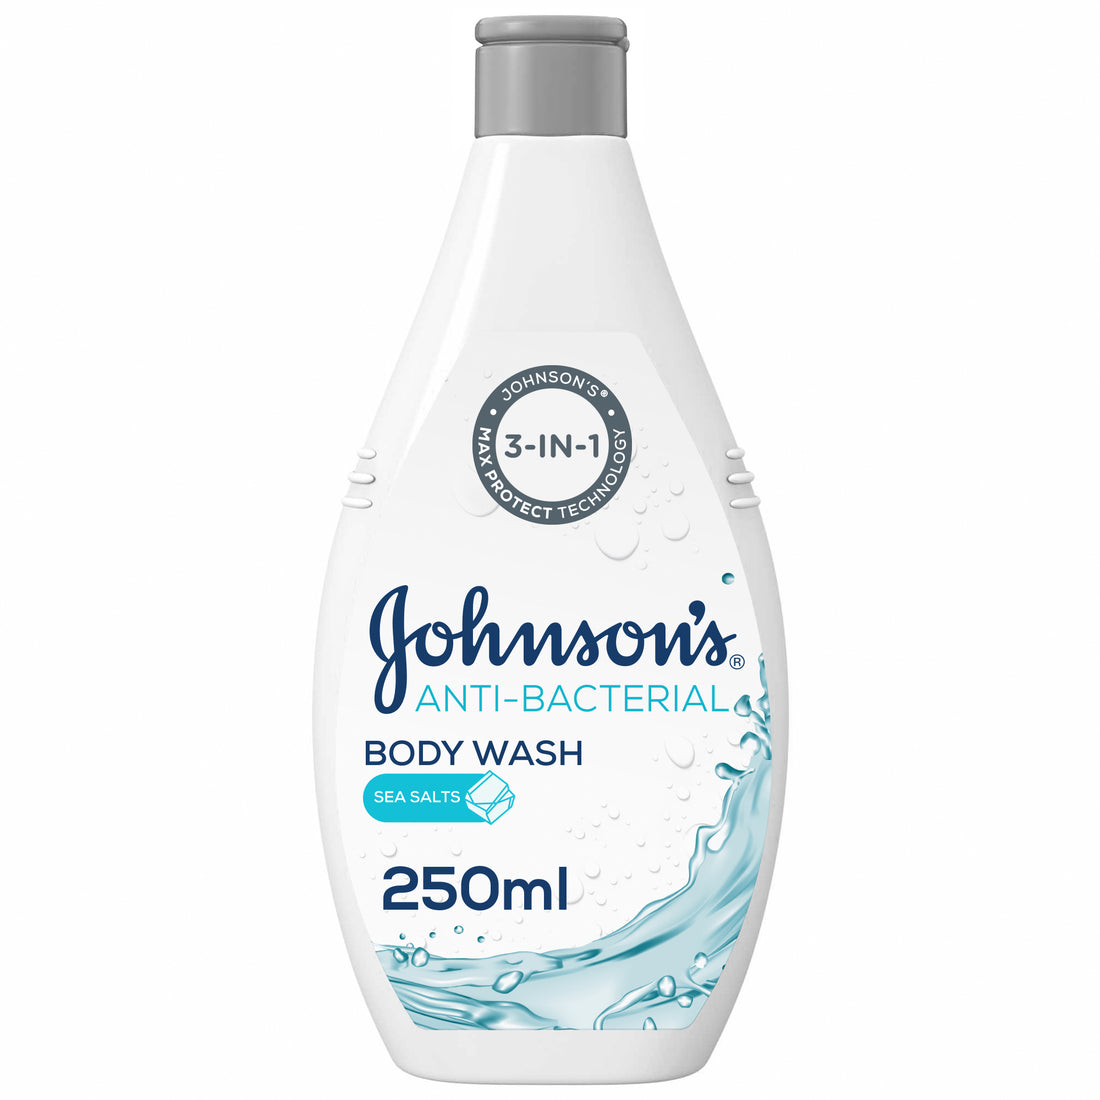 JOHNSON’S Body Wash, Anti-Bacterial, Sea Salts, 250ml